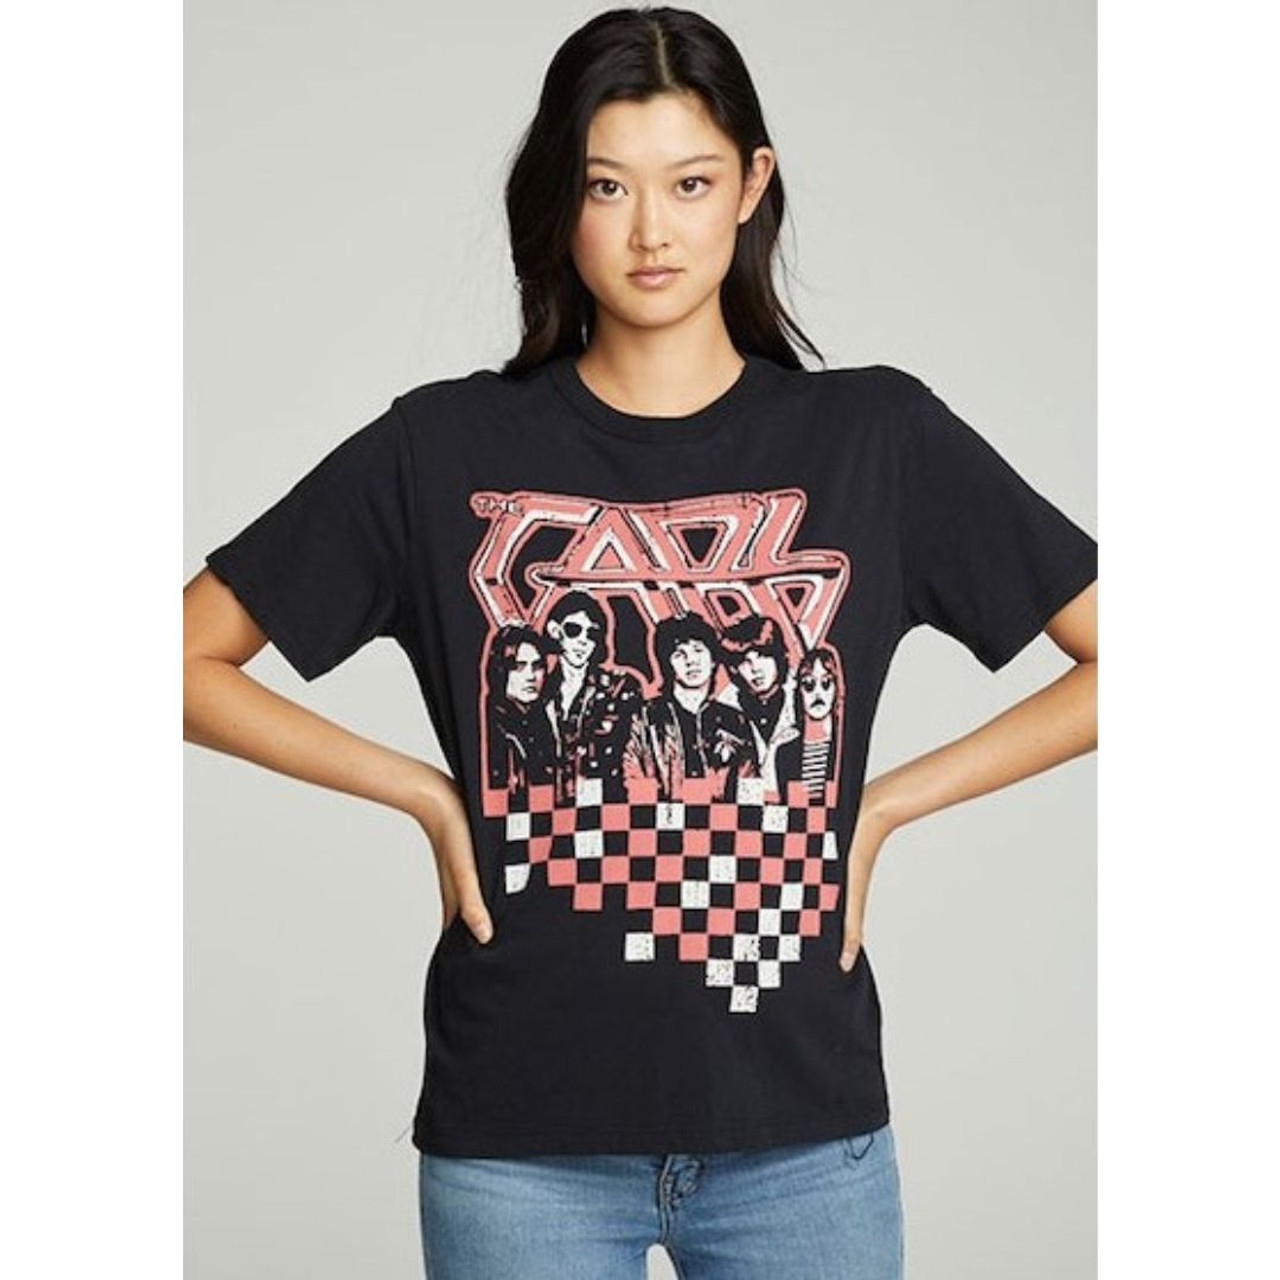 Cars Band Members & Logo Women's Fashion Chaser T-shirt